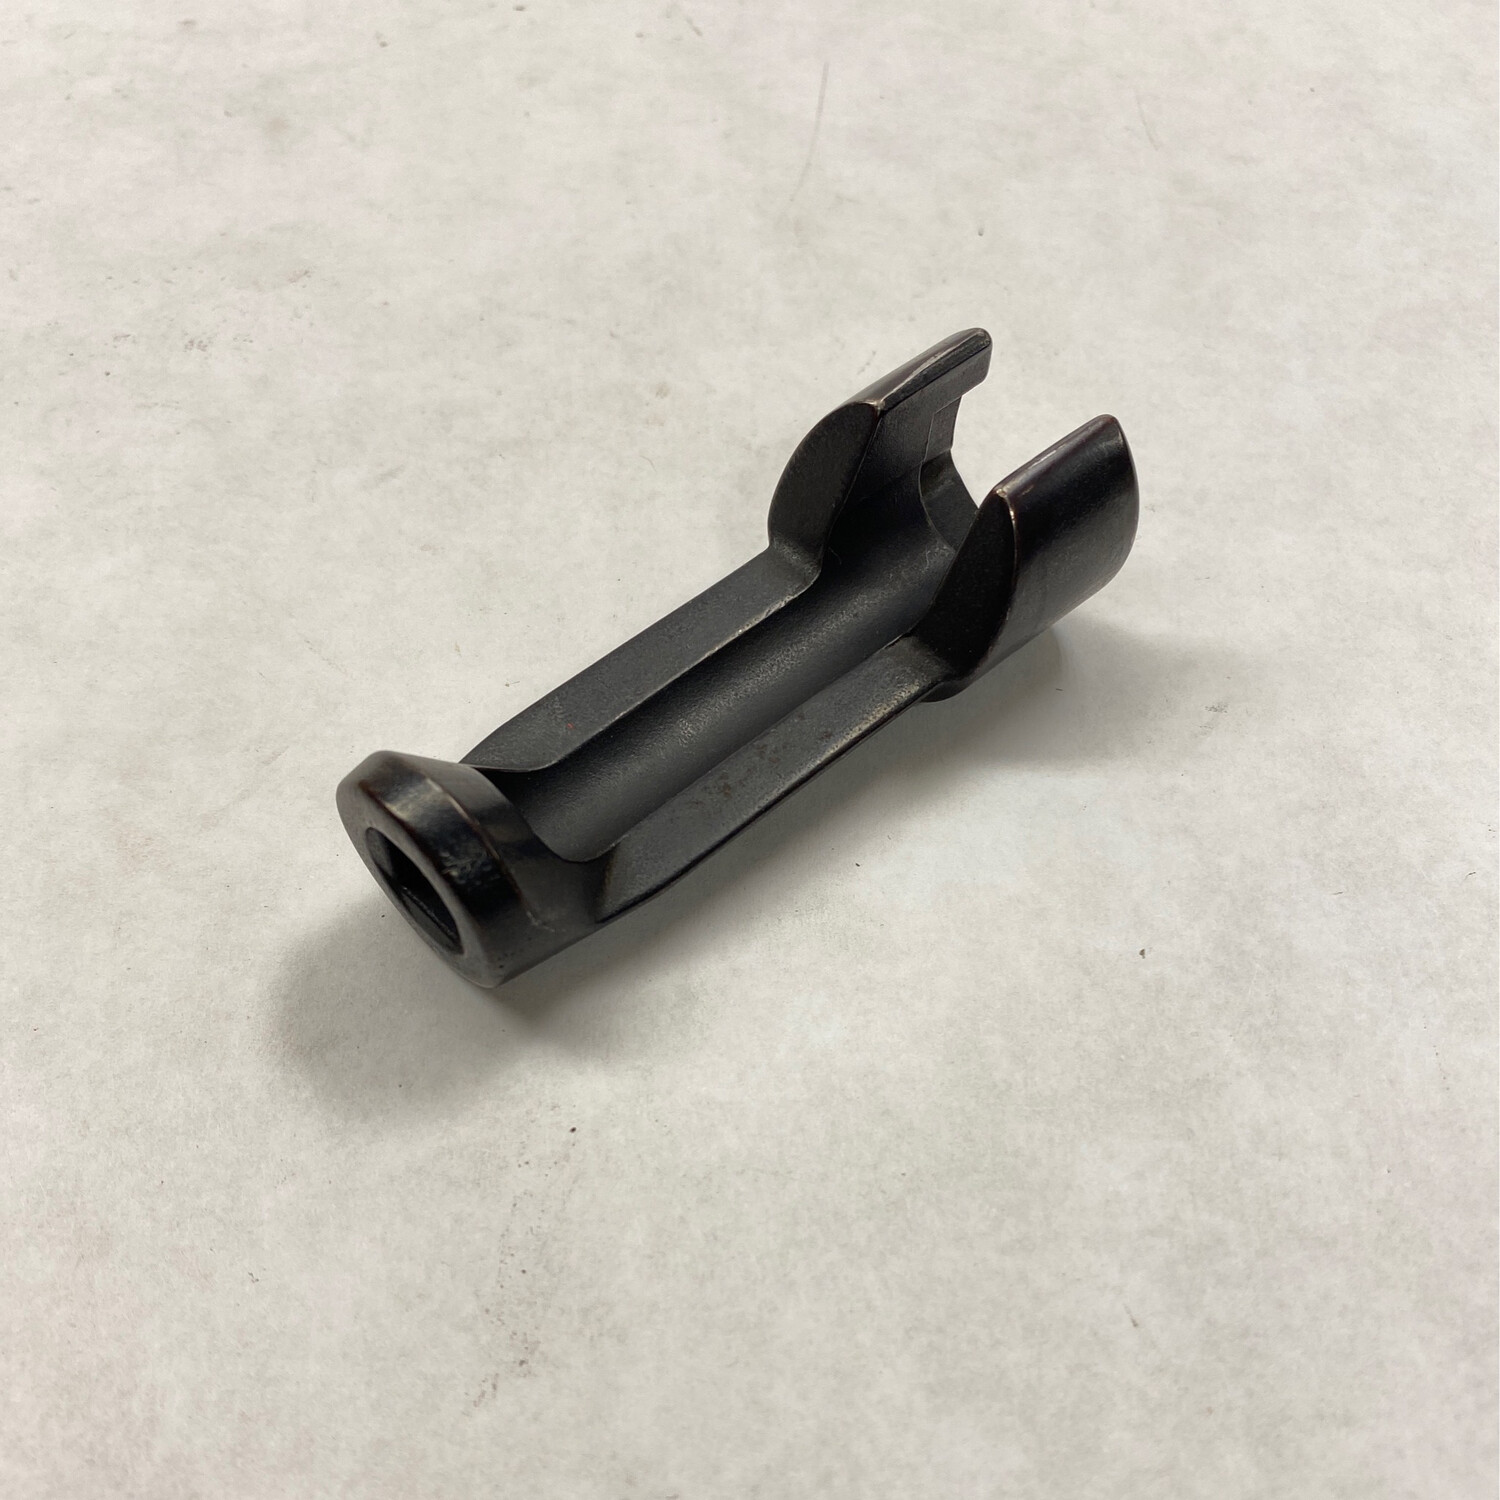 Matco Tools Cummins 3/4” Fuel Injection Flare Nut Socket, MST9910